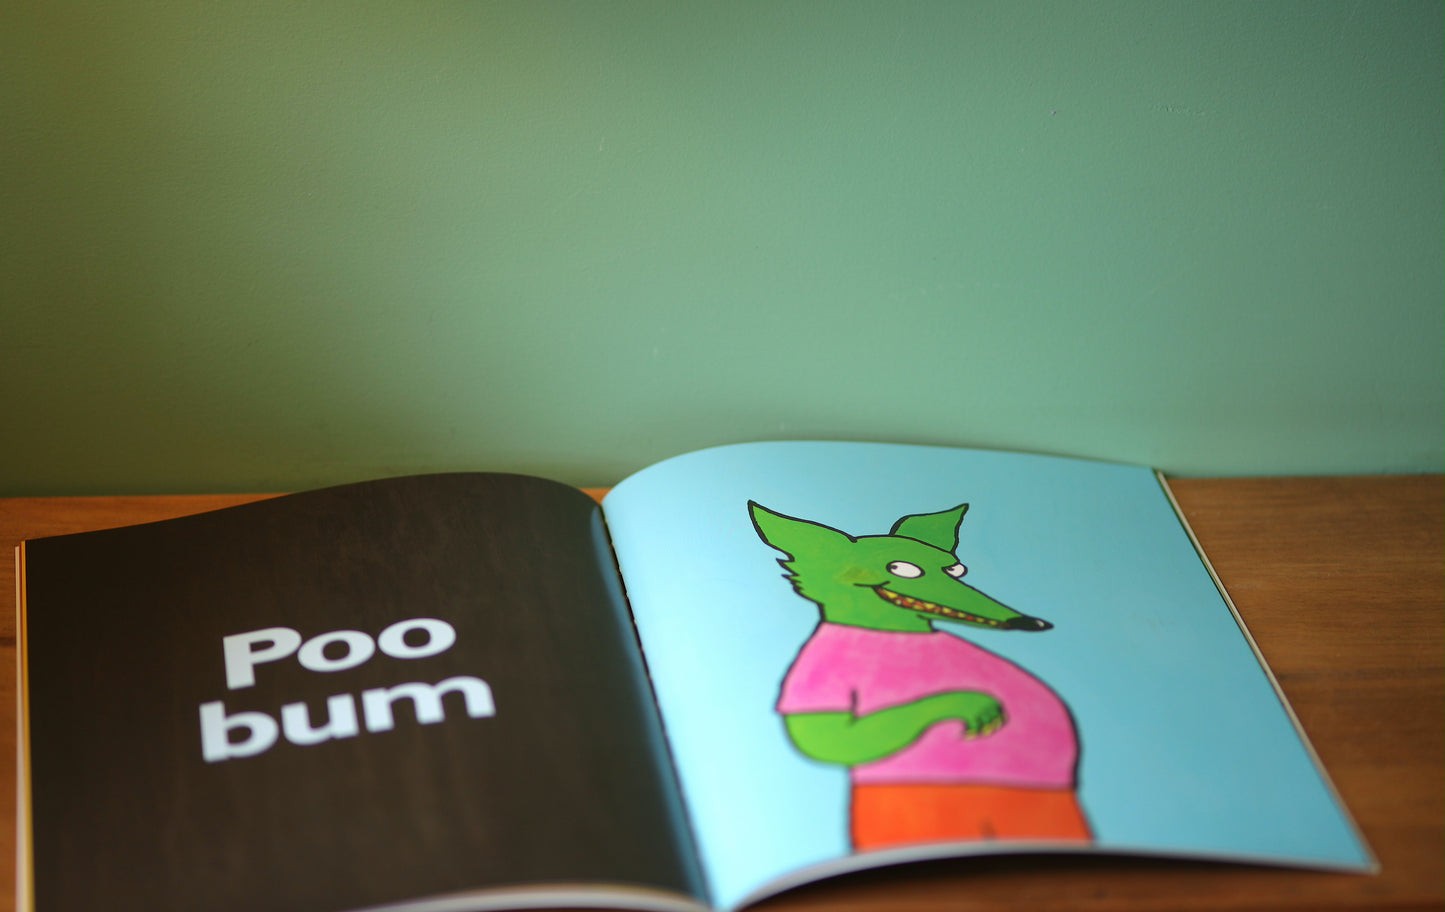 Poo Bum by Stephanie Blake